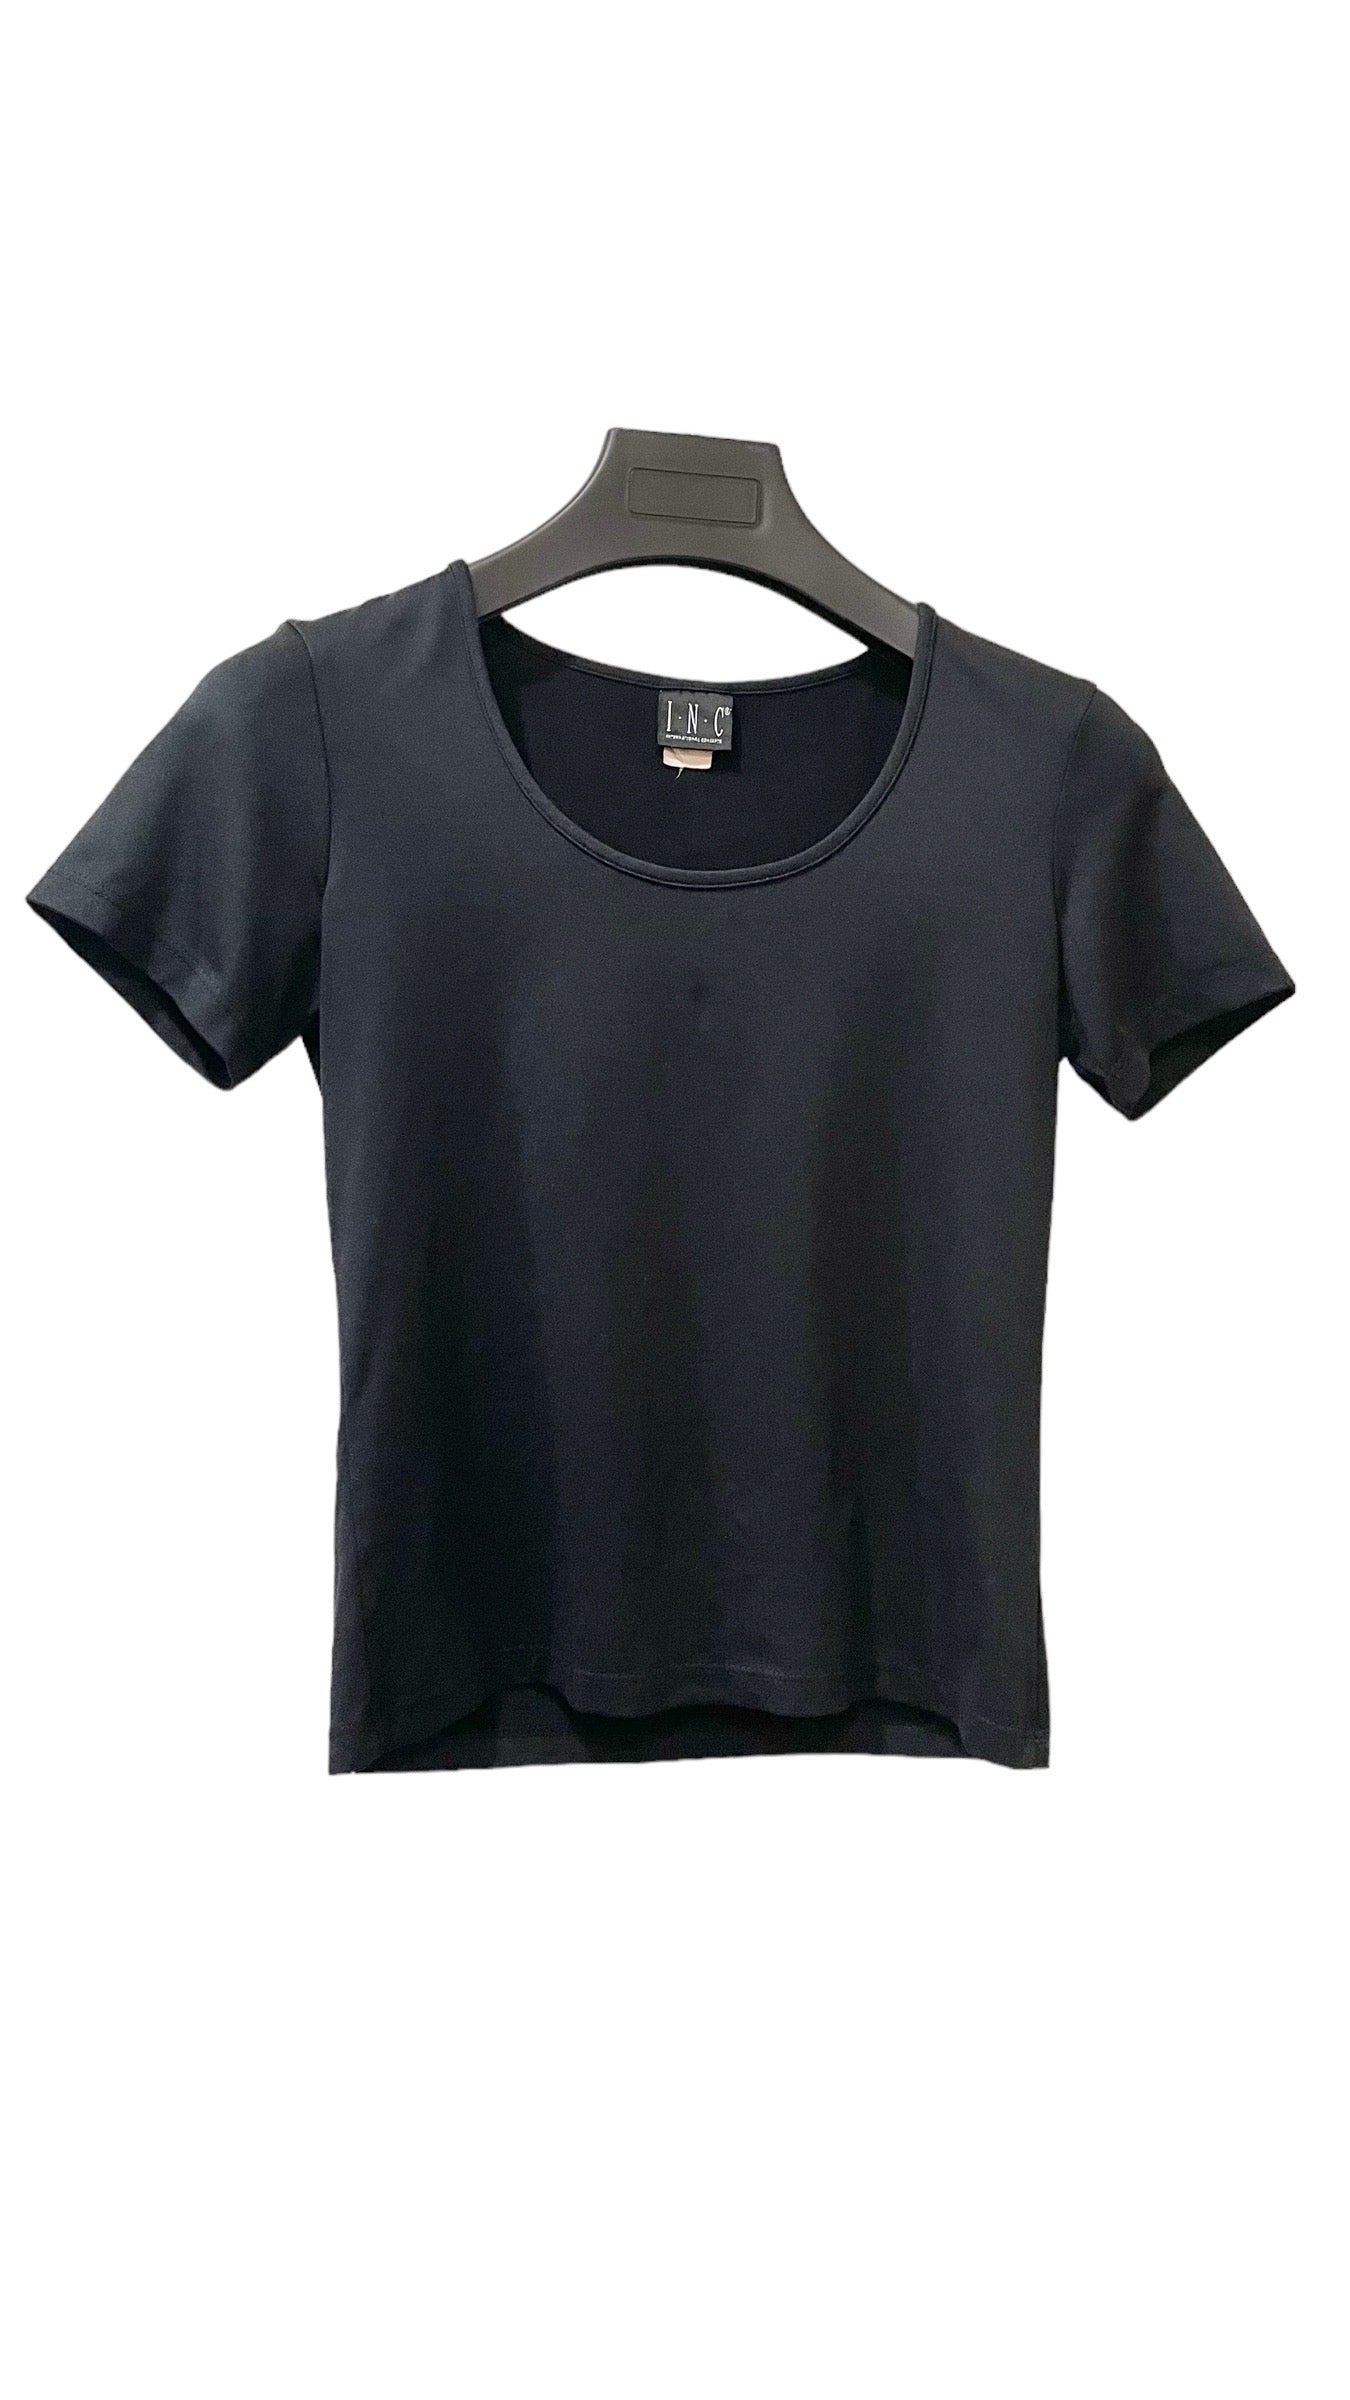 Vintage 90s black short sleeve ballet t shirt top - Size S